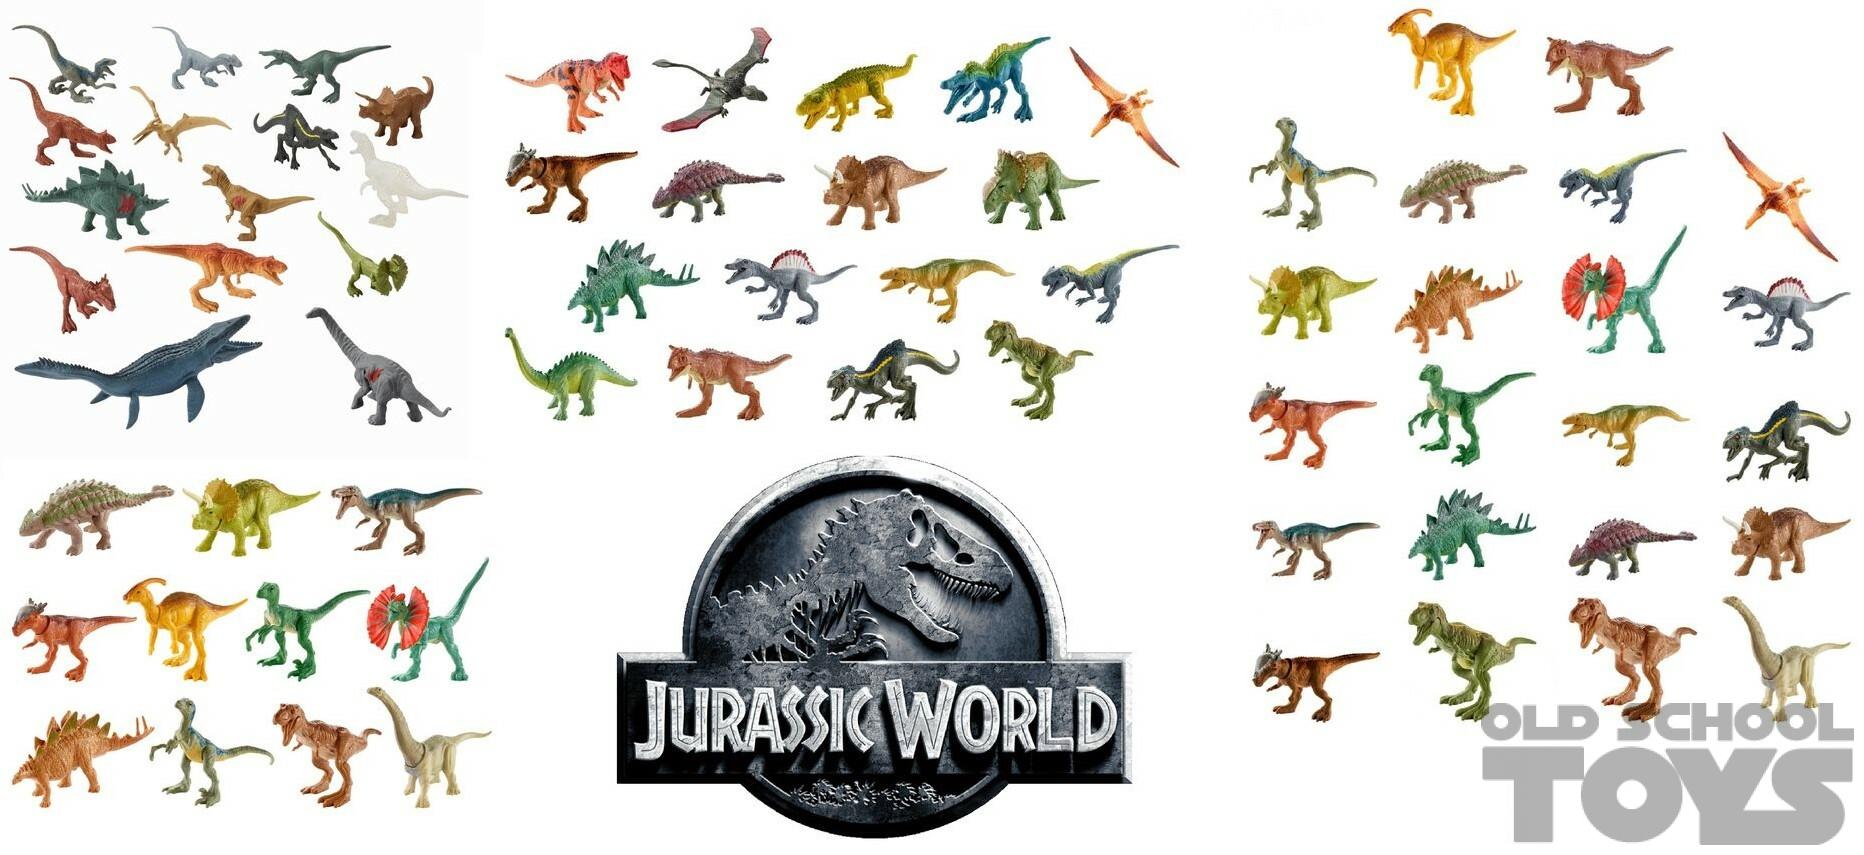 open haard Gaan wandelen Onverenigbaar Jurassic World mini action dinos blind bags (Mattel) | Old School Toys